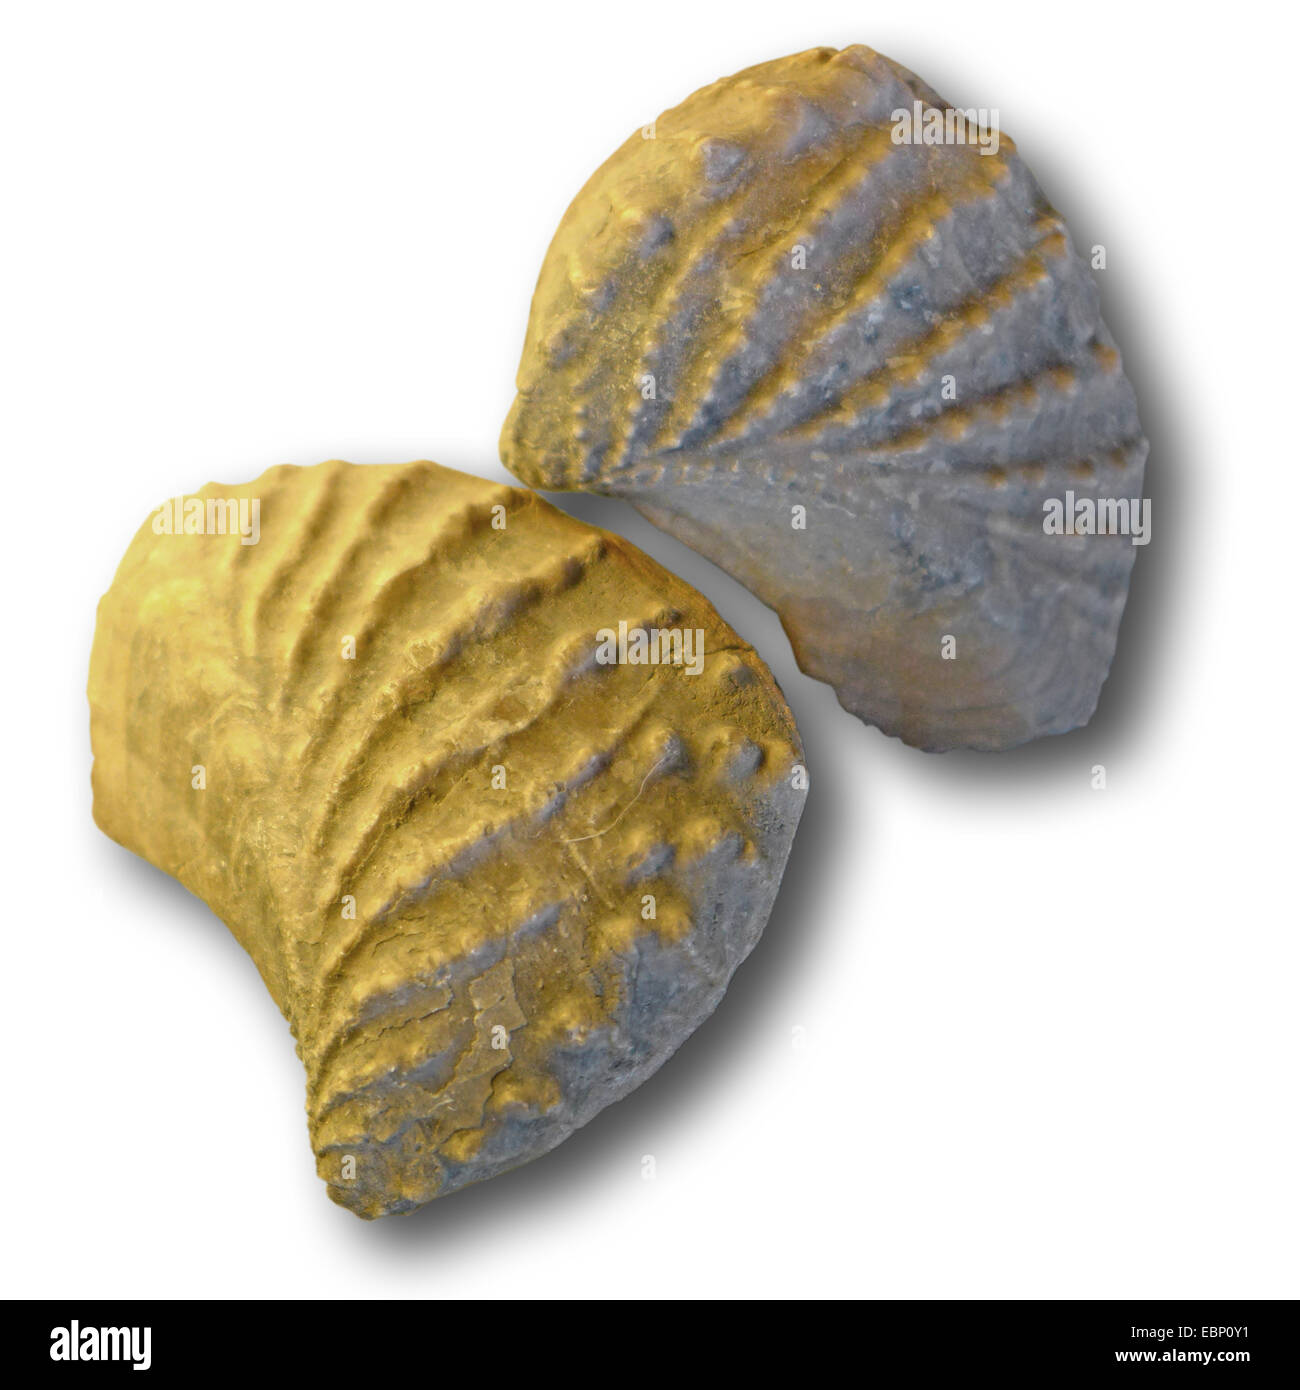 Trigoniidae (Trigonia navis), fossile Trigoniidae from Jurassic (210-140 million years), locality: Germany Stock Photo